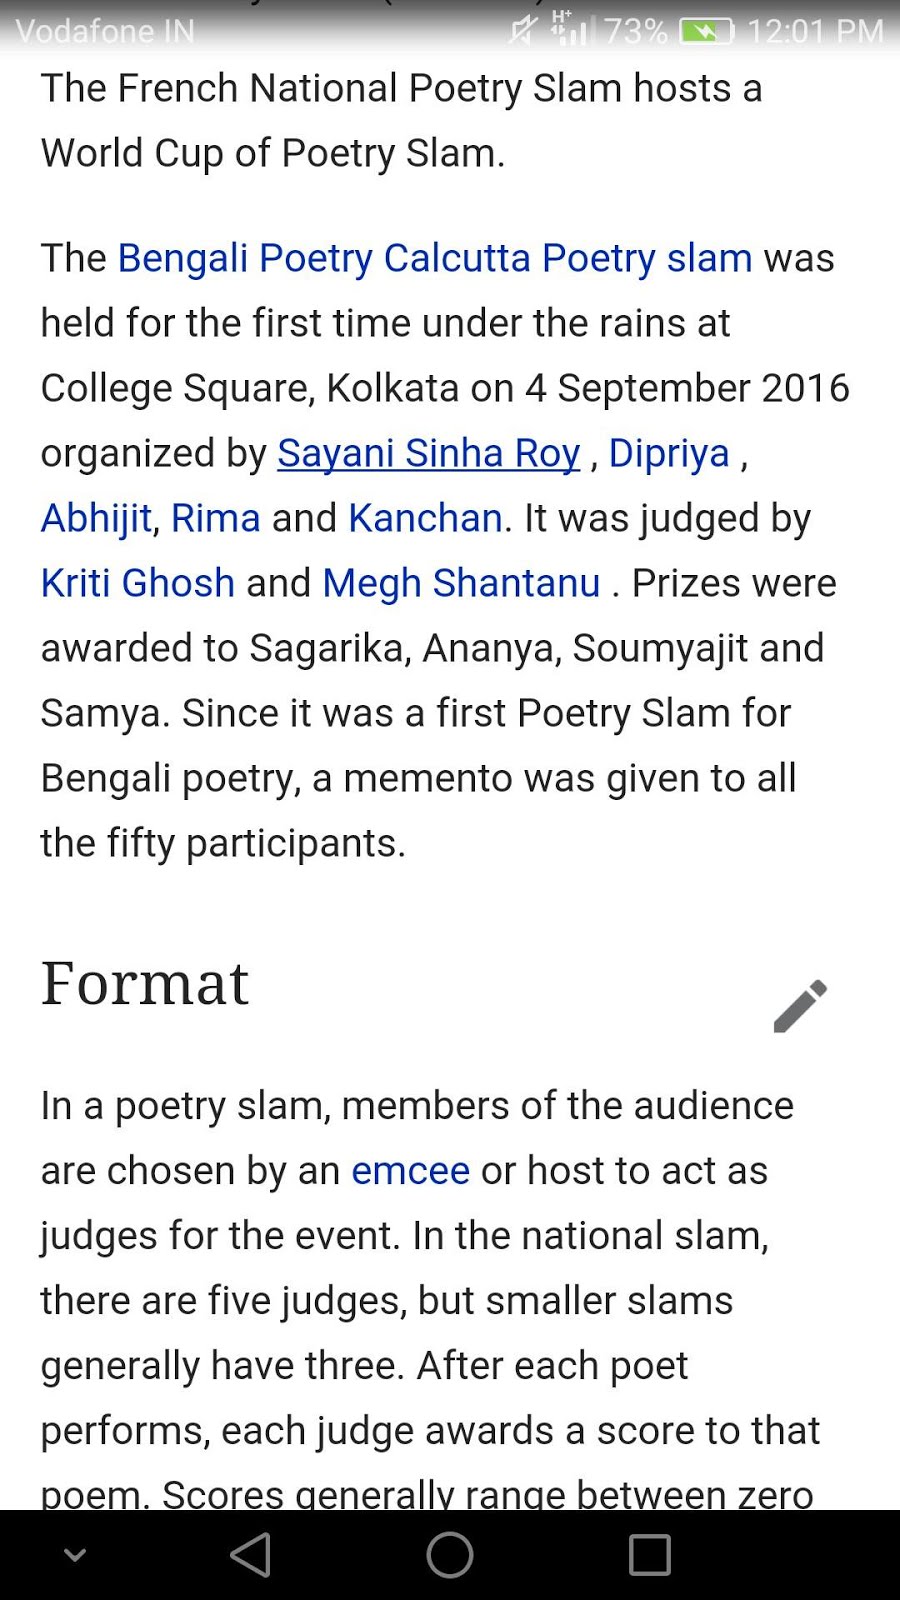 Wikipedia news on First Slam